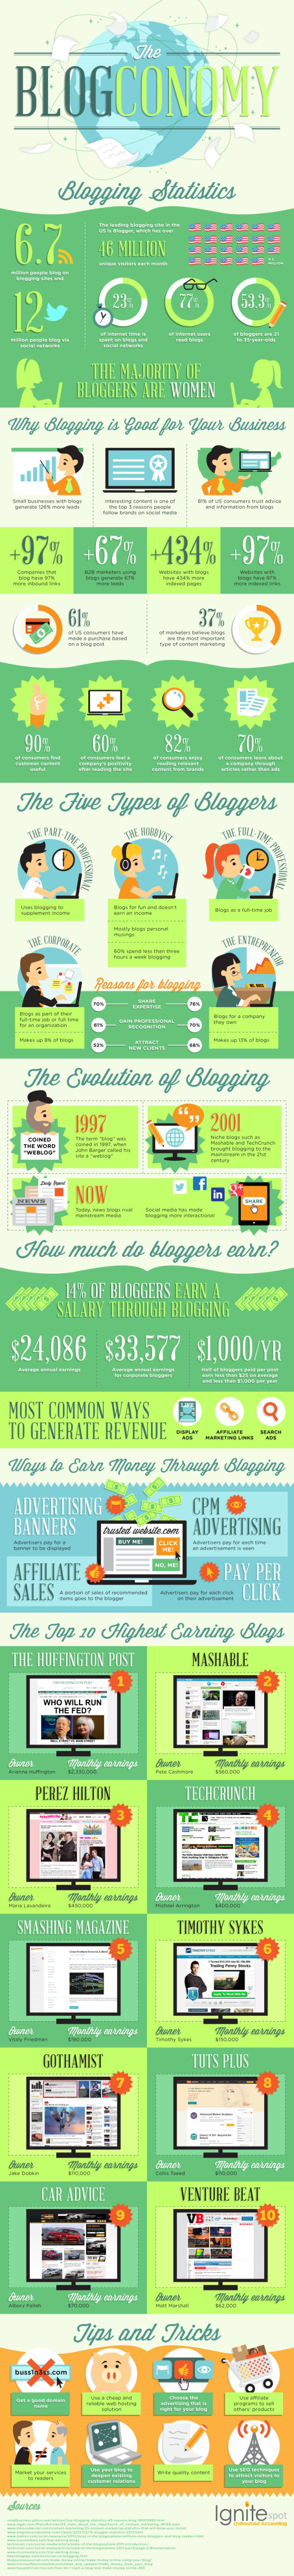 Blogging For Businesses